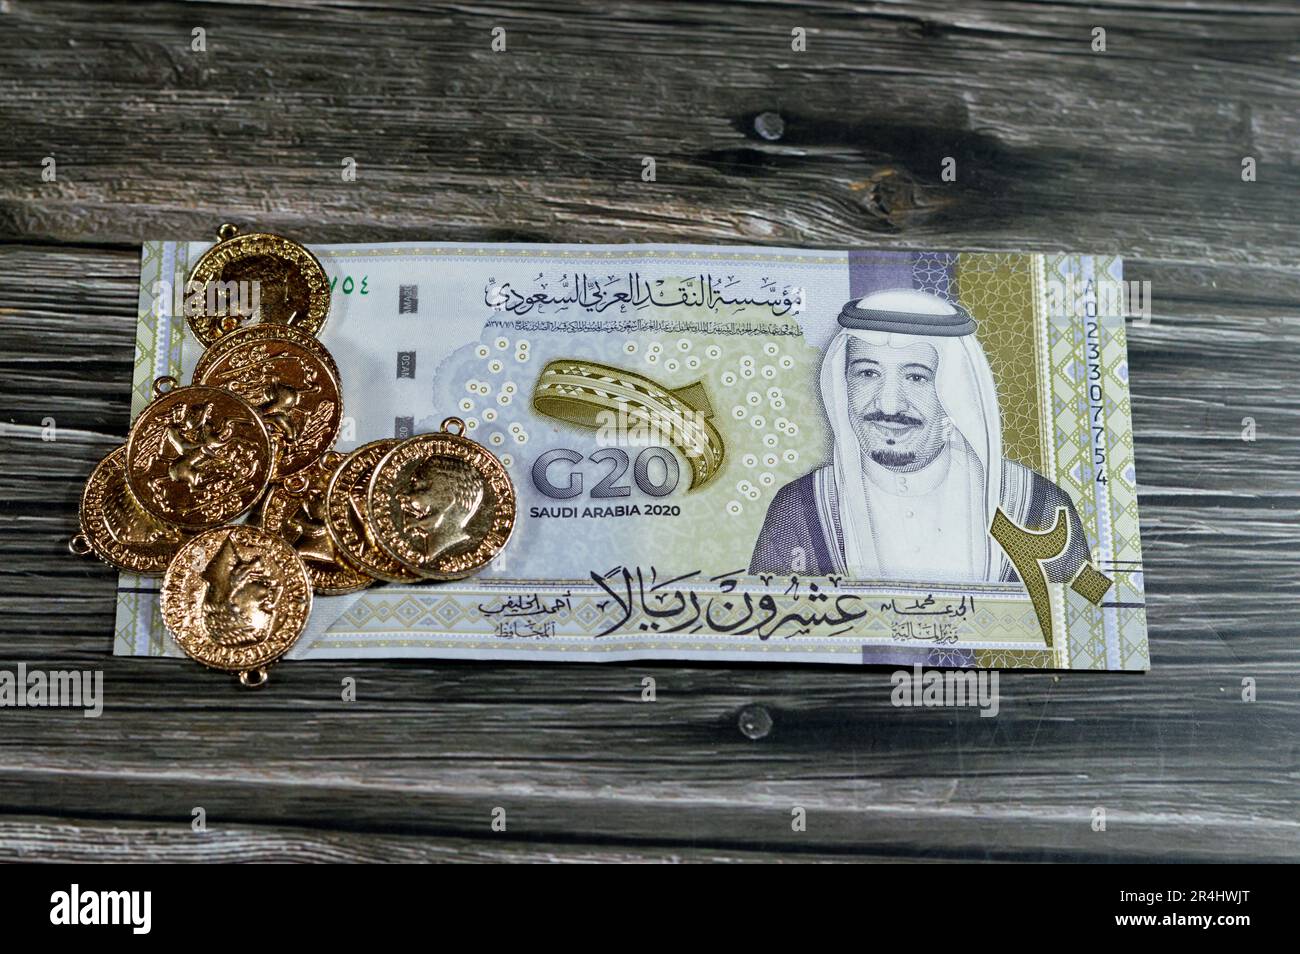 20 SAR twenty Saudi Arabia Riyals banknote currency bill money ...